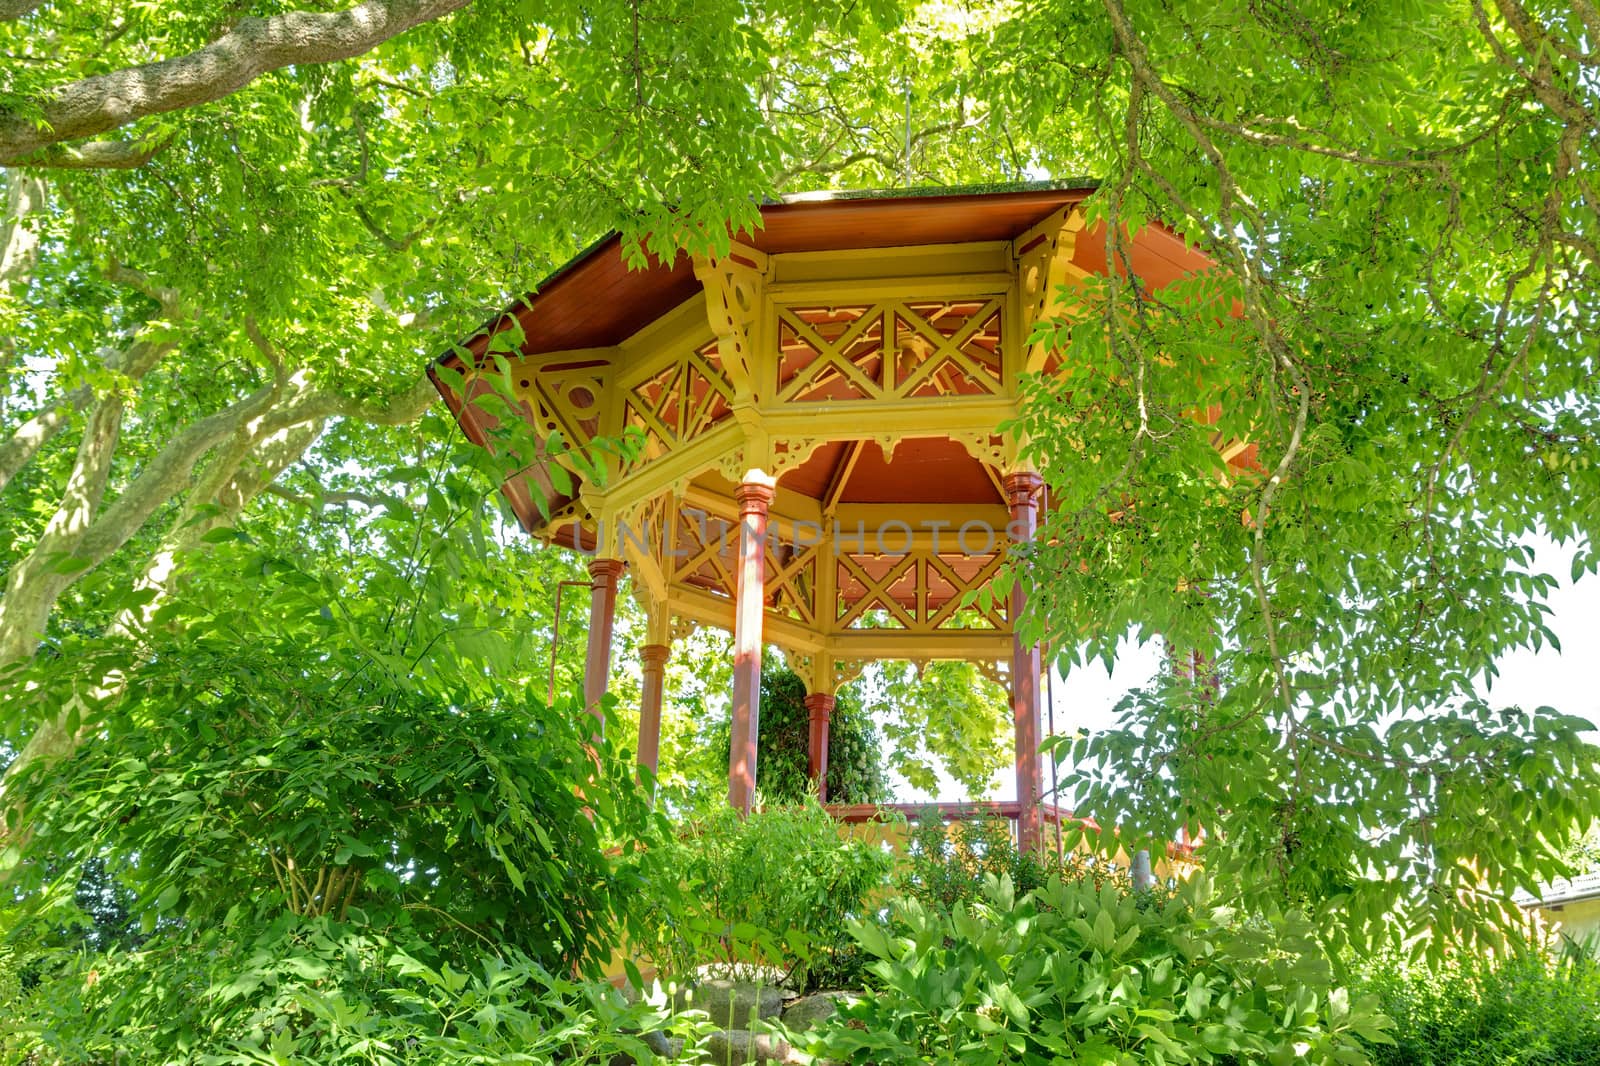 Wooden veranda in the summer garden by anikasalsera